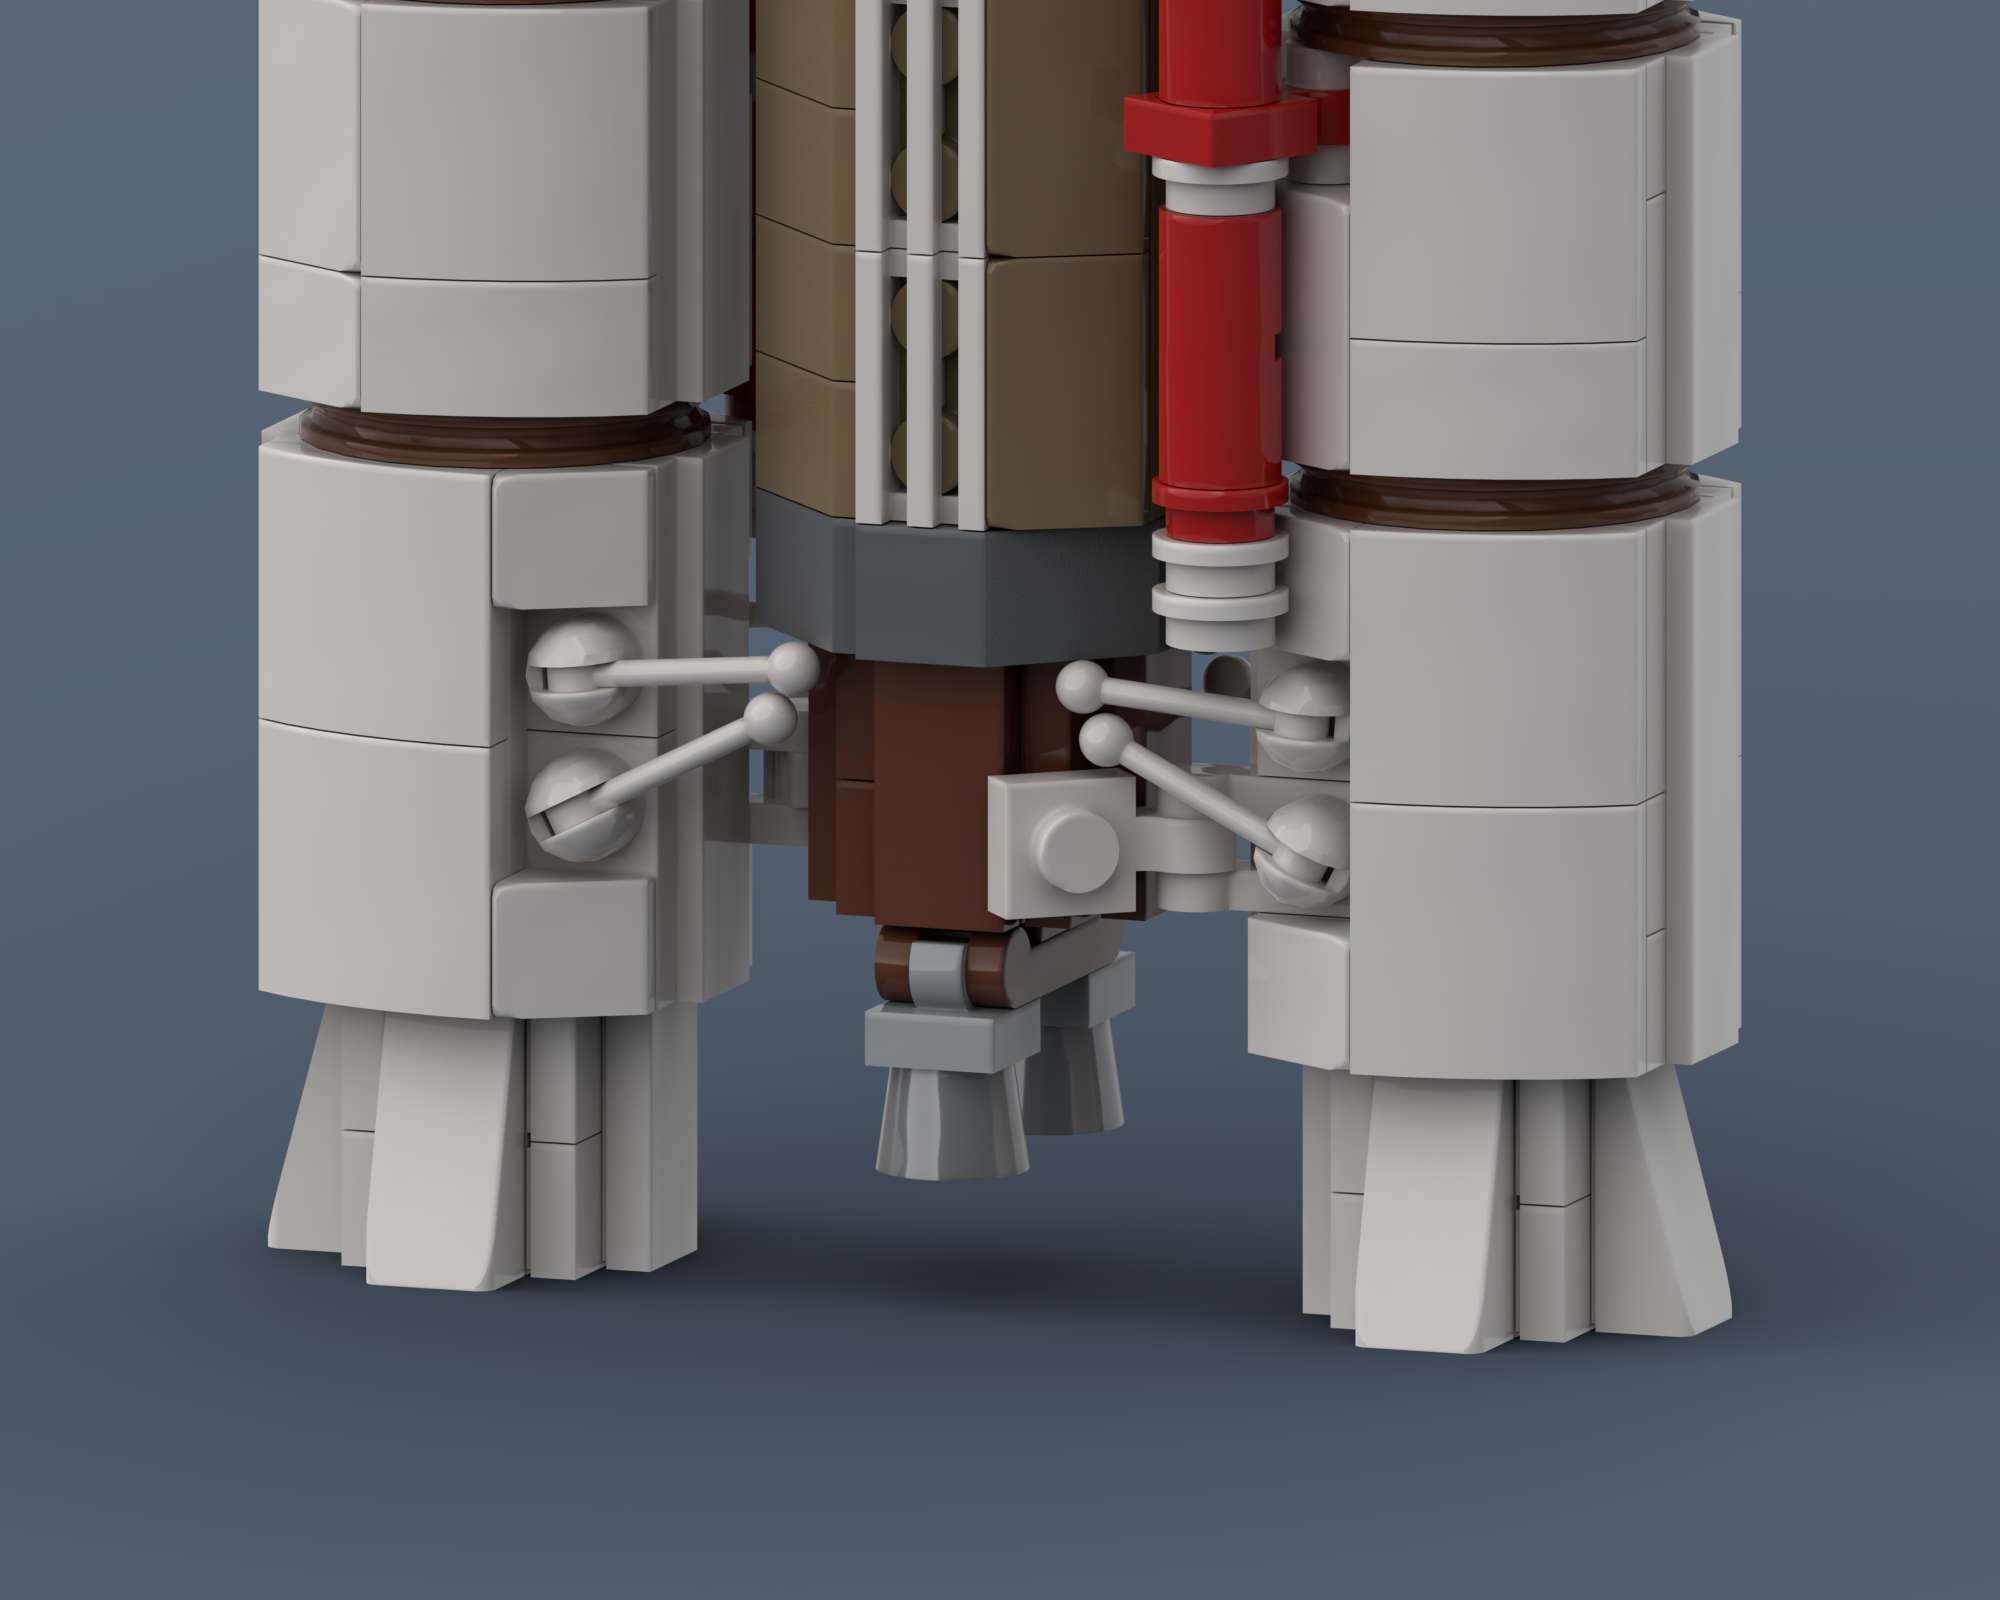 Titan III Commercial Skynet 4A and JCSAT 2